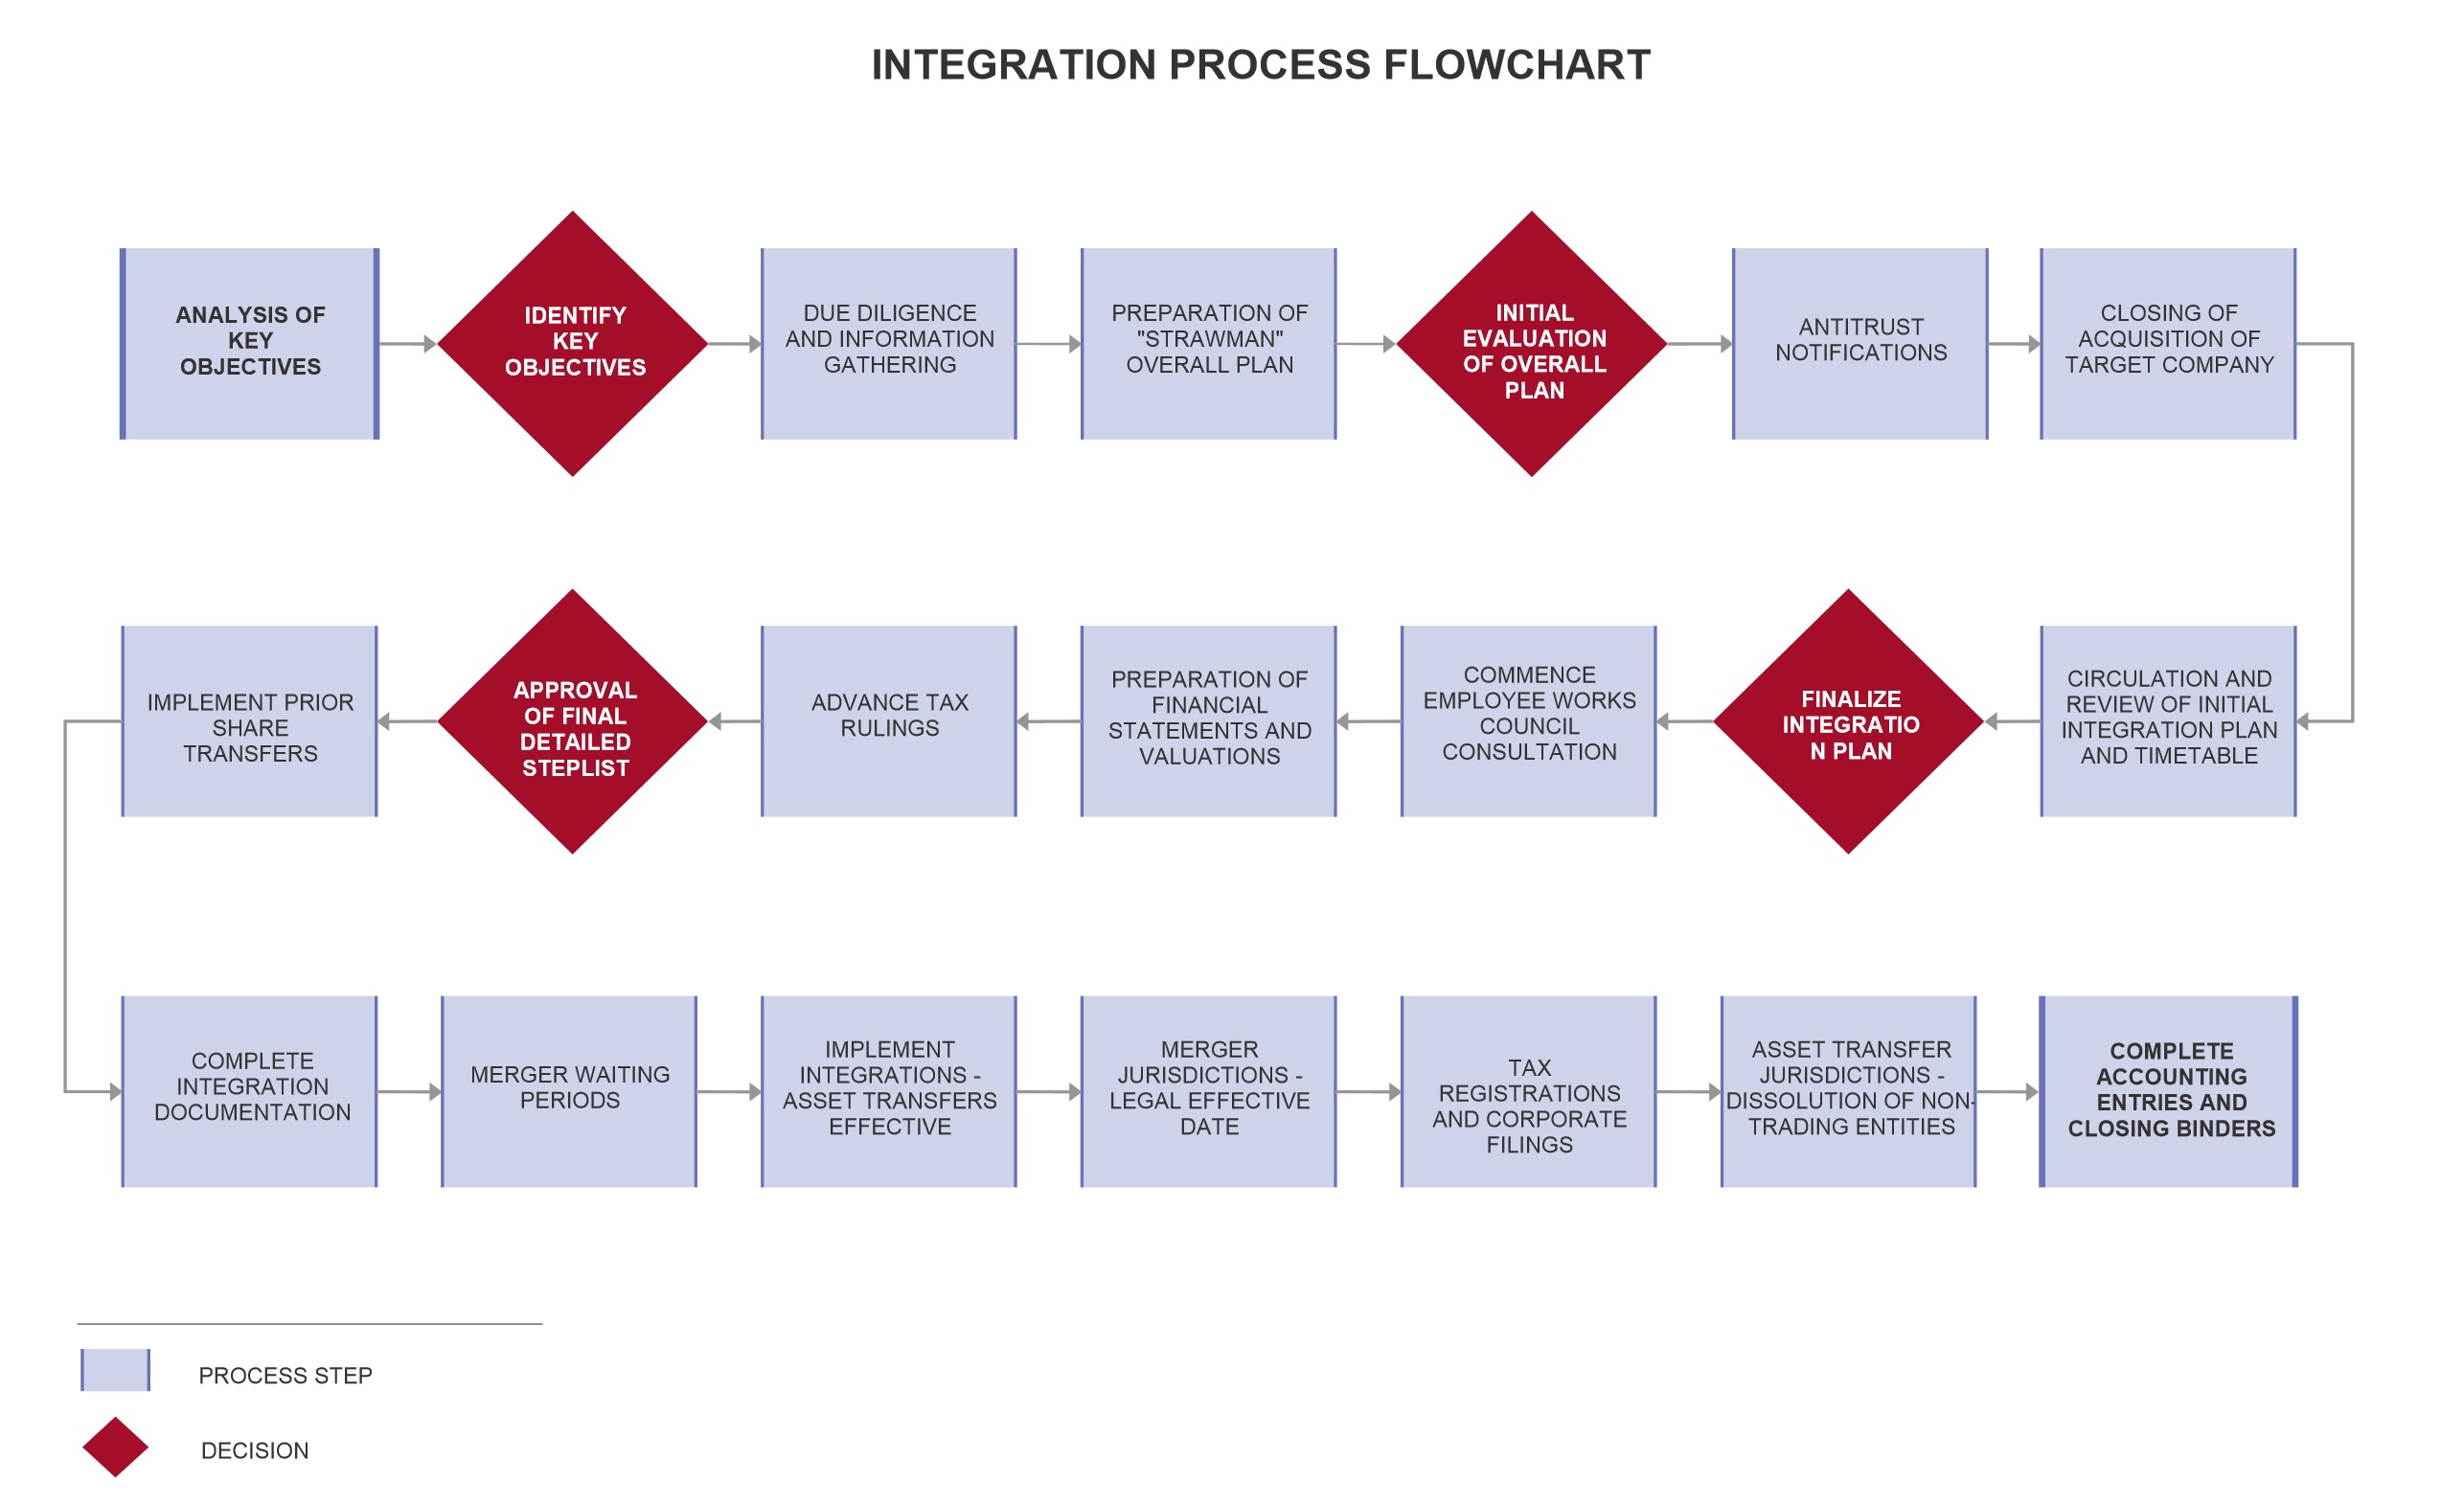 Figure 1 - Integration Process Flowchart